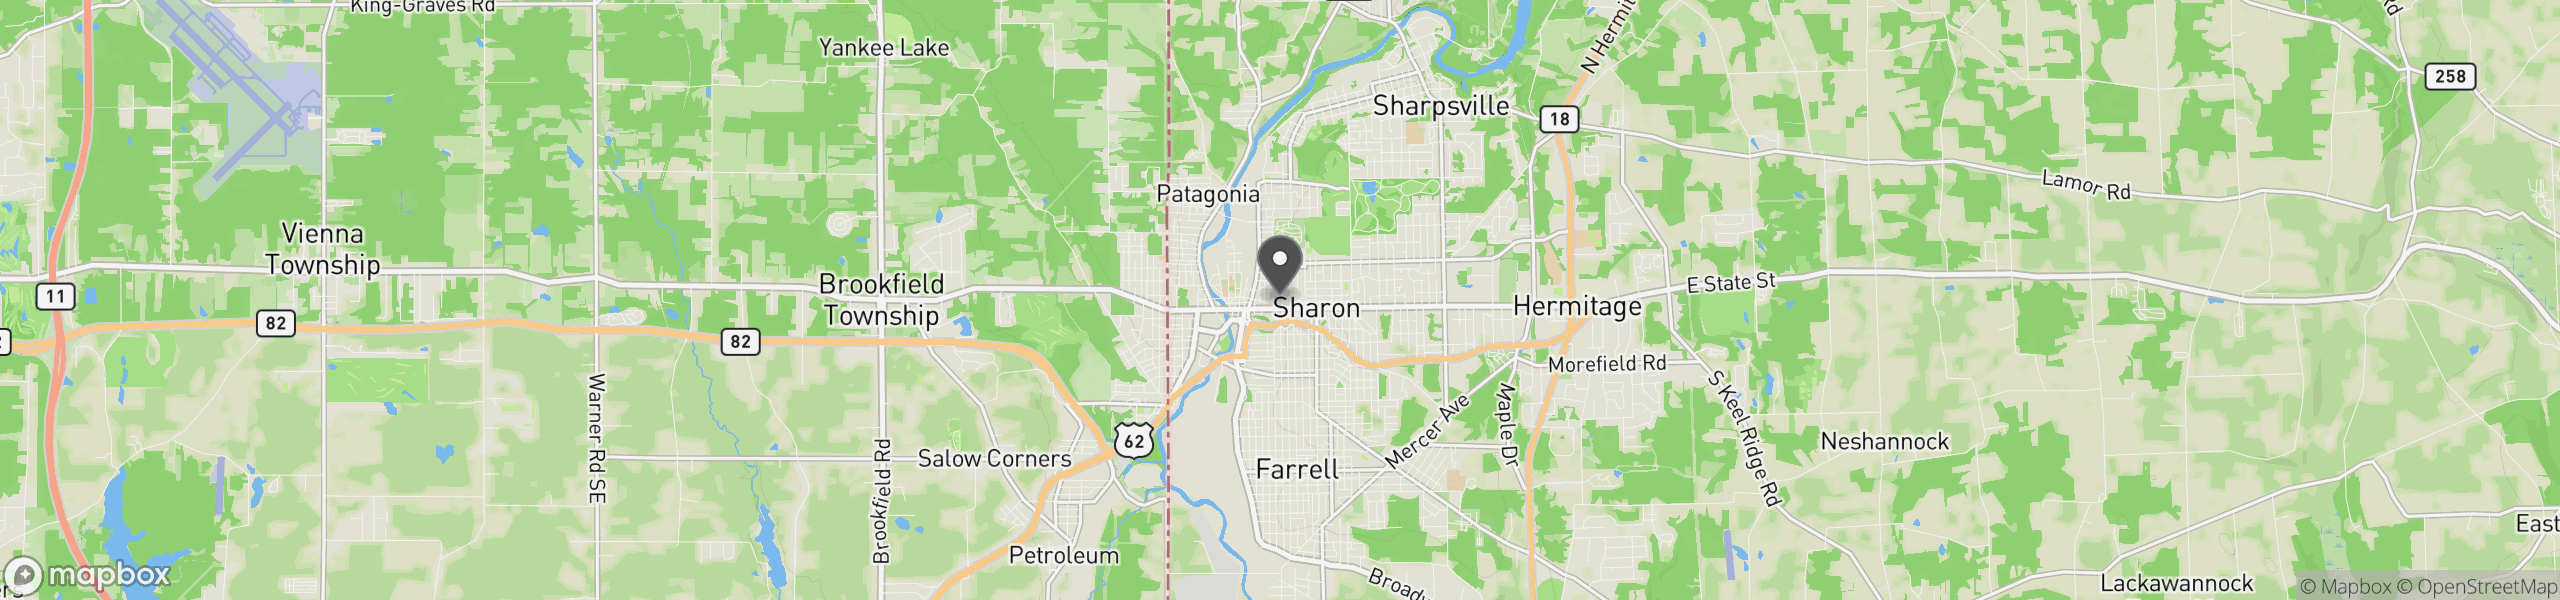 Sharon, PA 16146